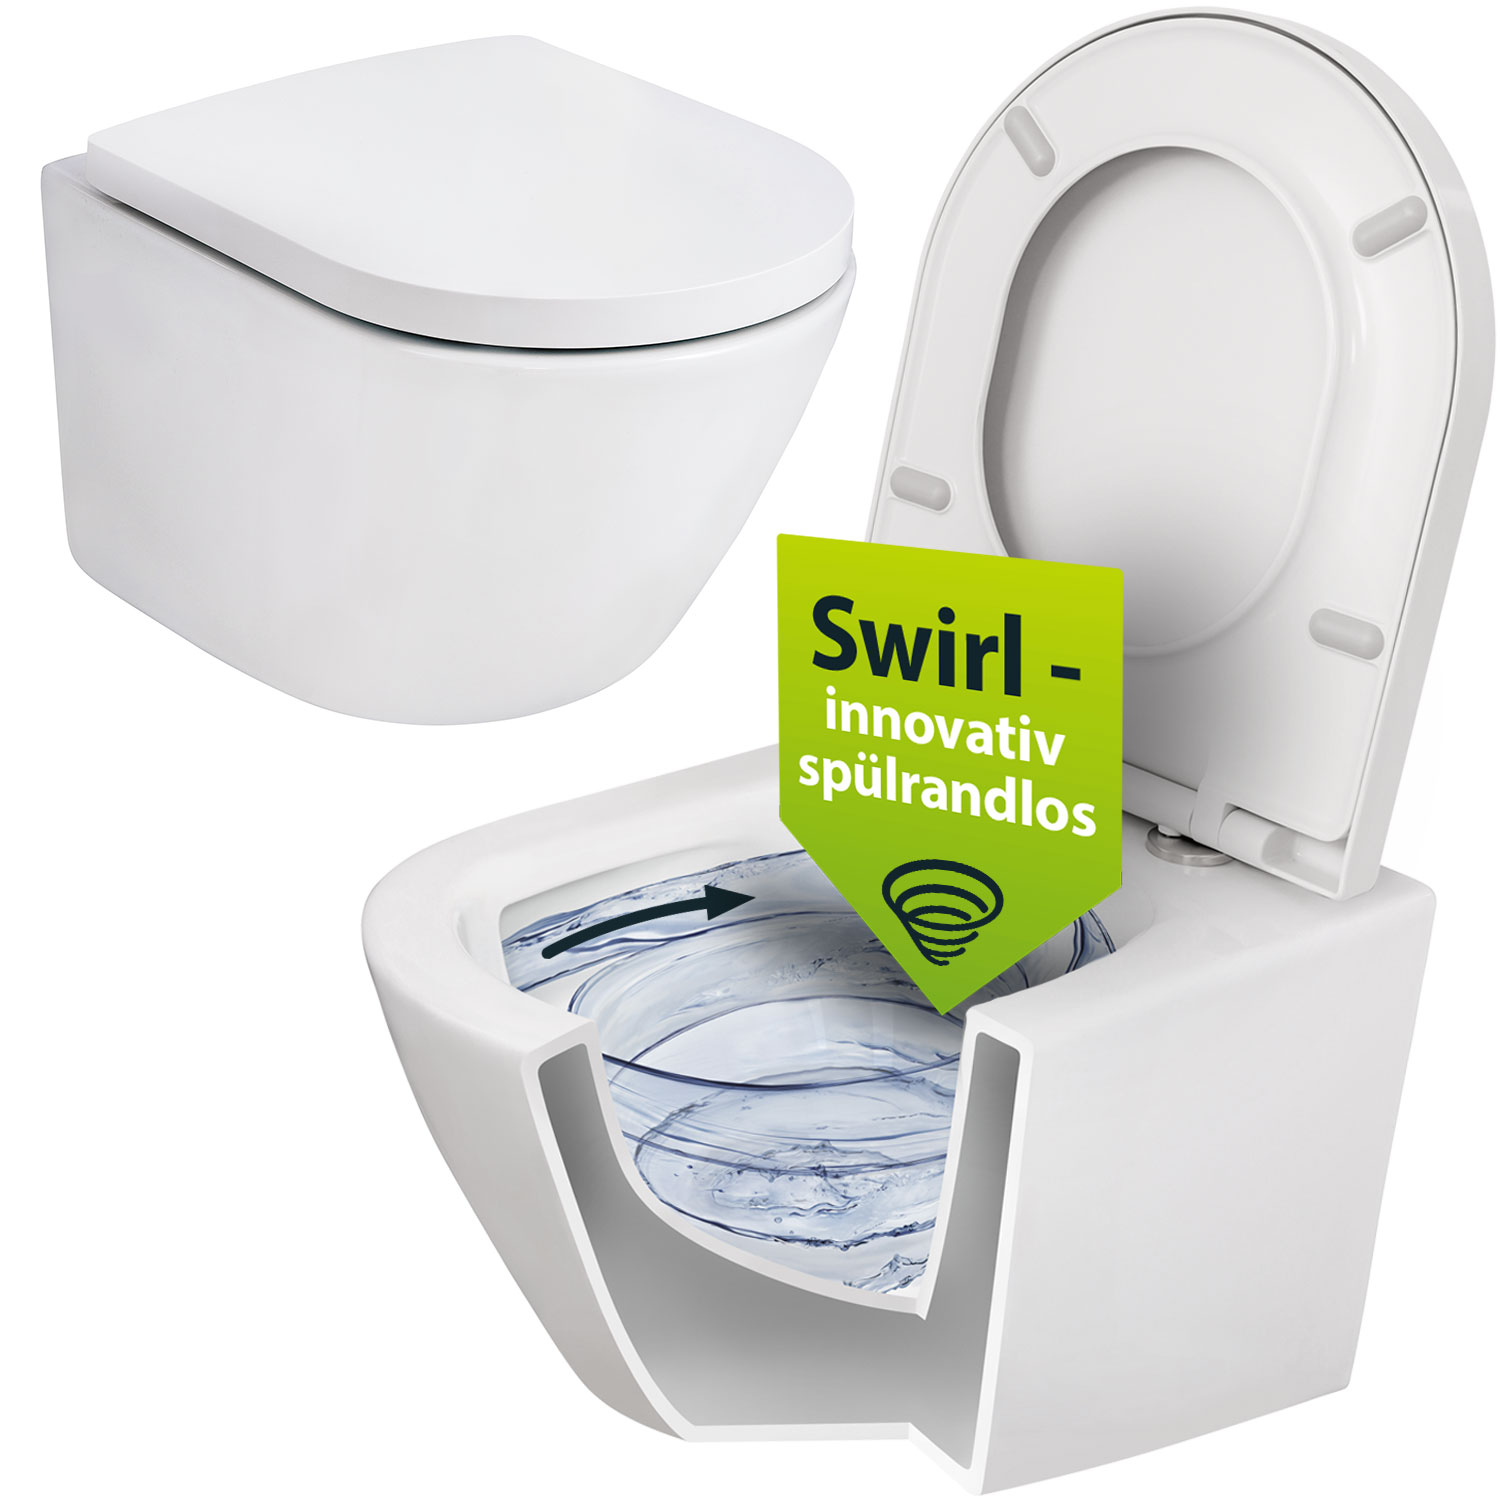 'aquaSu® Hänge-WC Spülrandlos 2.0, innovative Swirl-Spültechnik, spritzfrei, leise, Sitz, Weiß